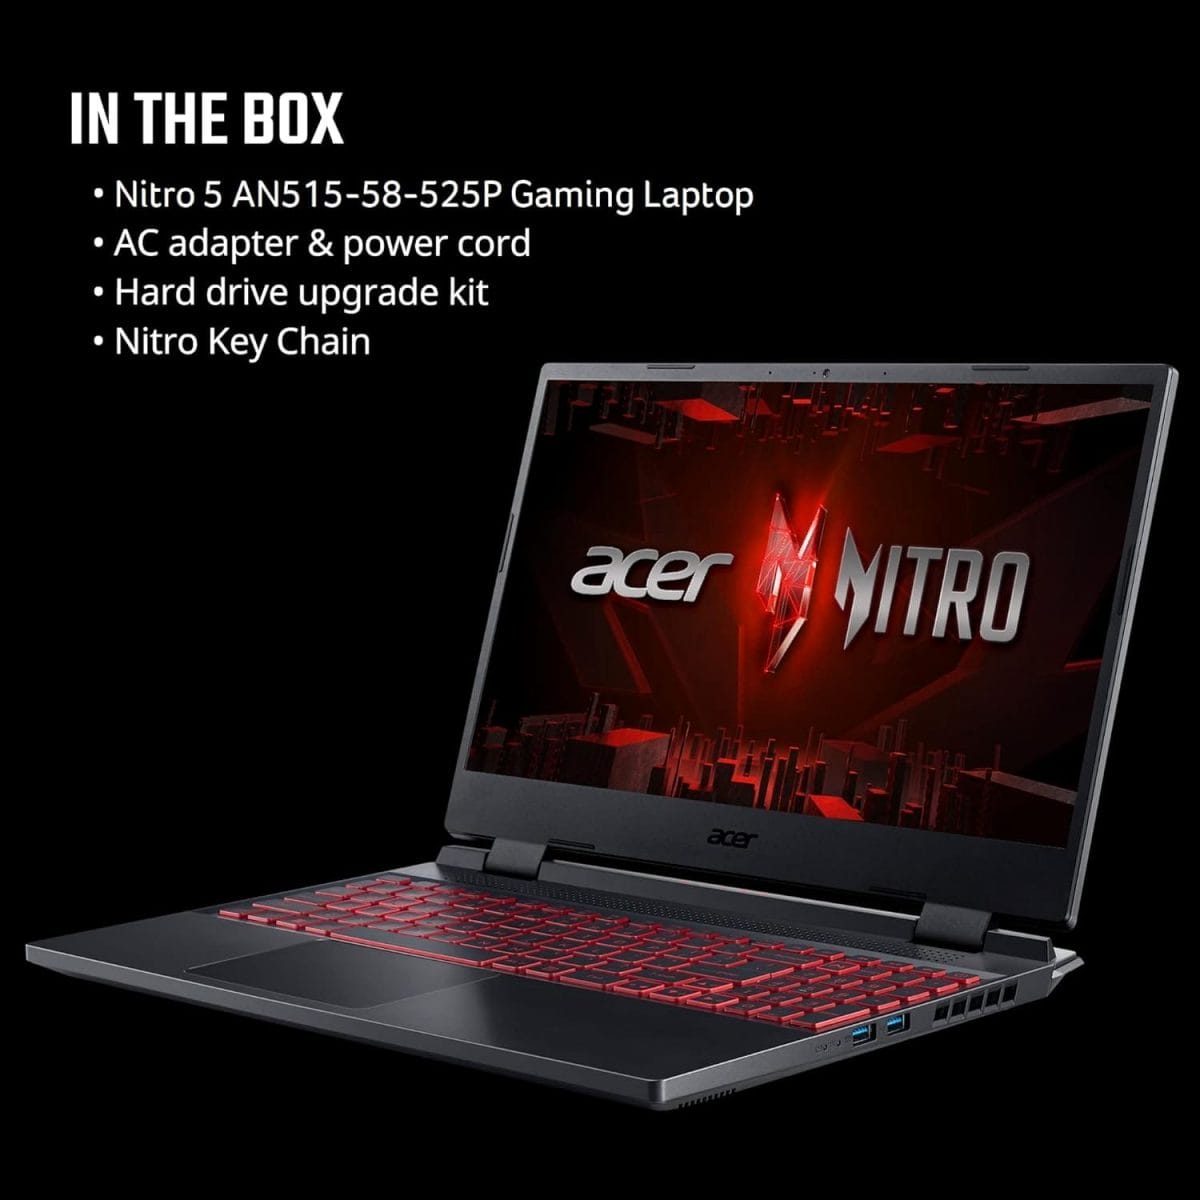 Acer Nitro 5 AN515-58-525P Gaming Laptop |Core i5-12500H | NVIDIA GeForce RTX 3050 Laptop GPU | 15.6 FHD 144Hz IPS Display | 8GB DDR4 | 512GB PCIe Gen 4 SSD | Killer Wi-Fi 6 | Backlit Keyboard, Black